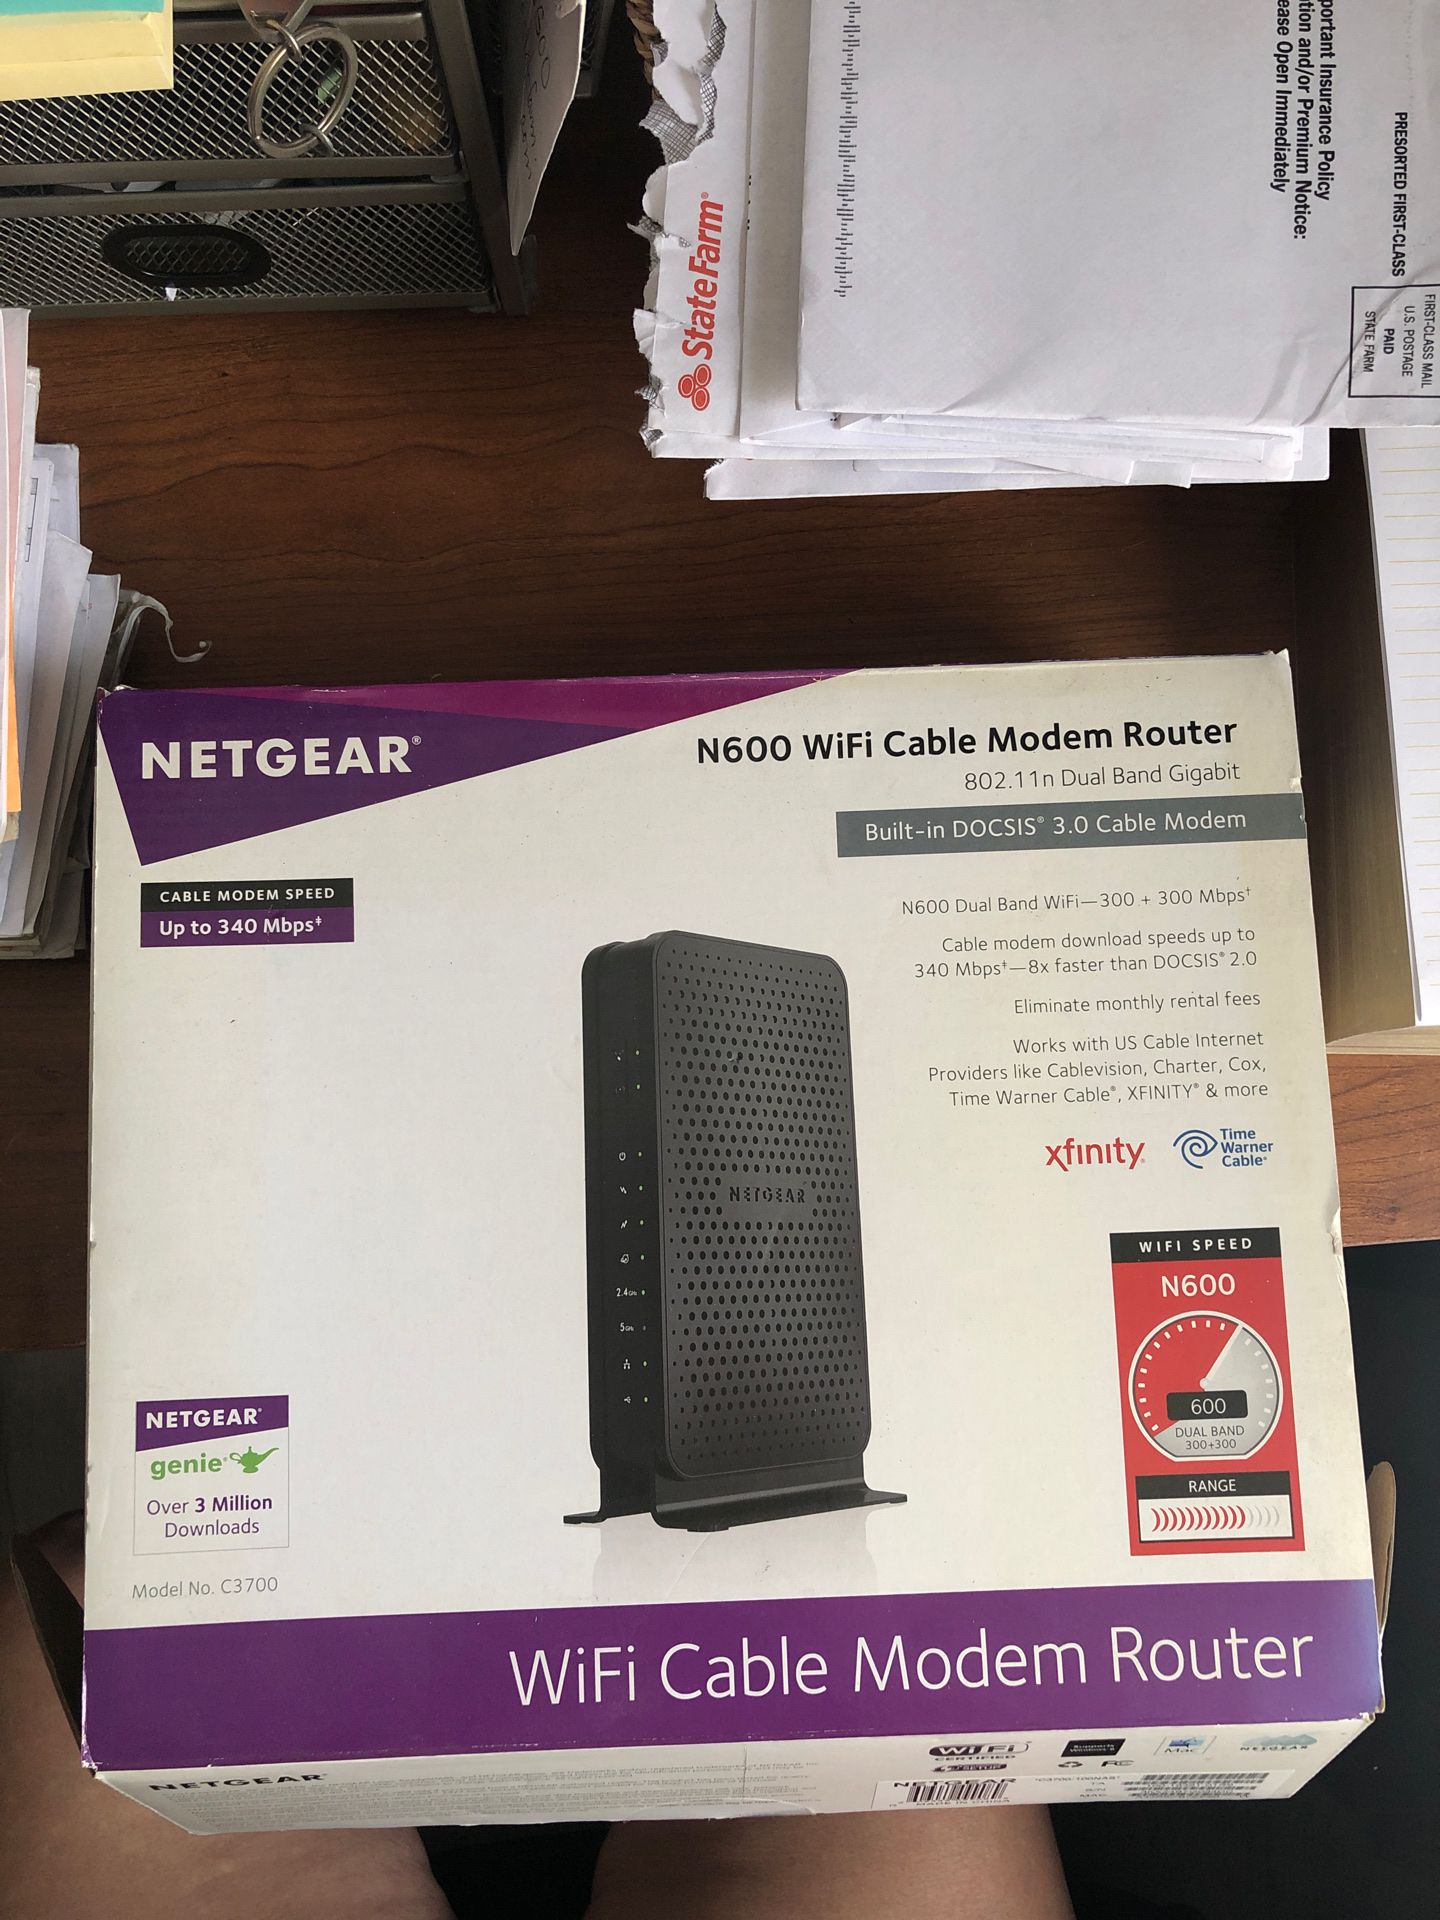 NETGEAR WiFi Cable Modem Router N600